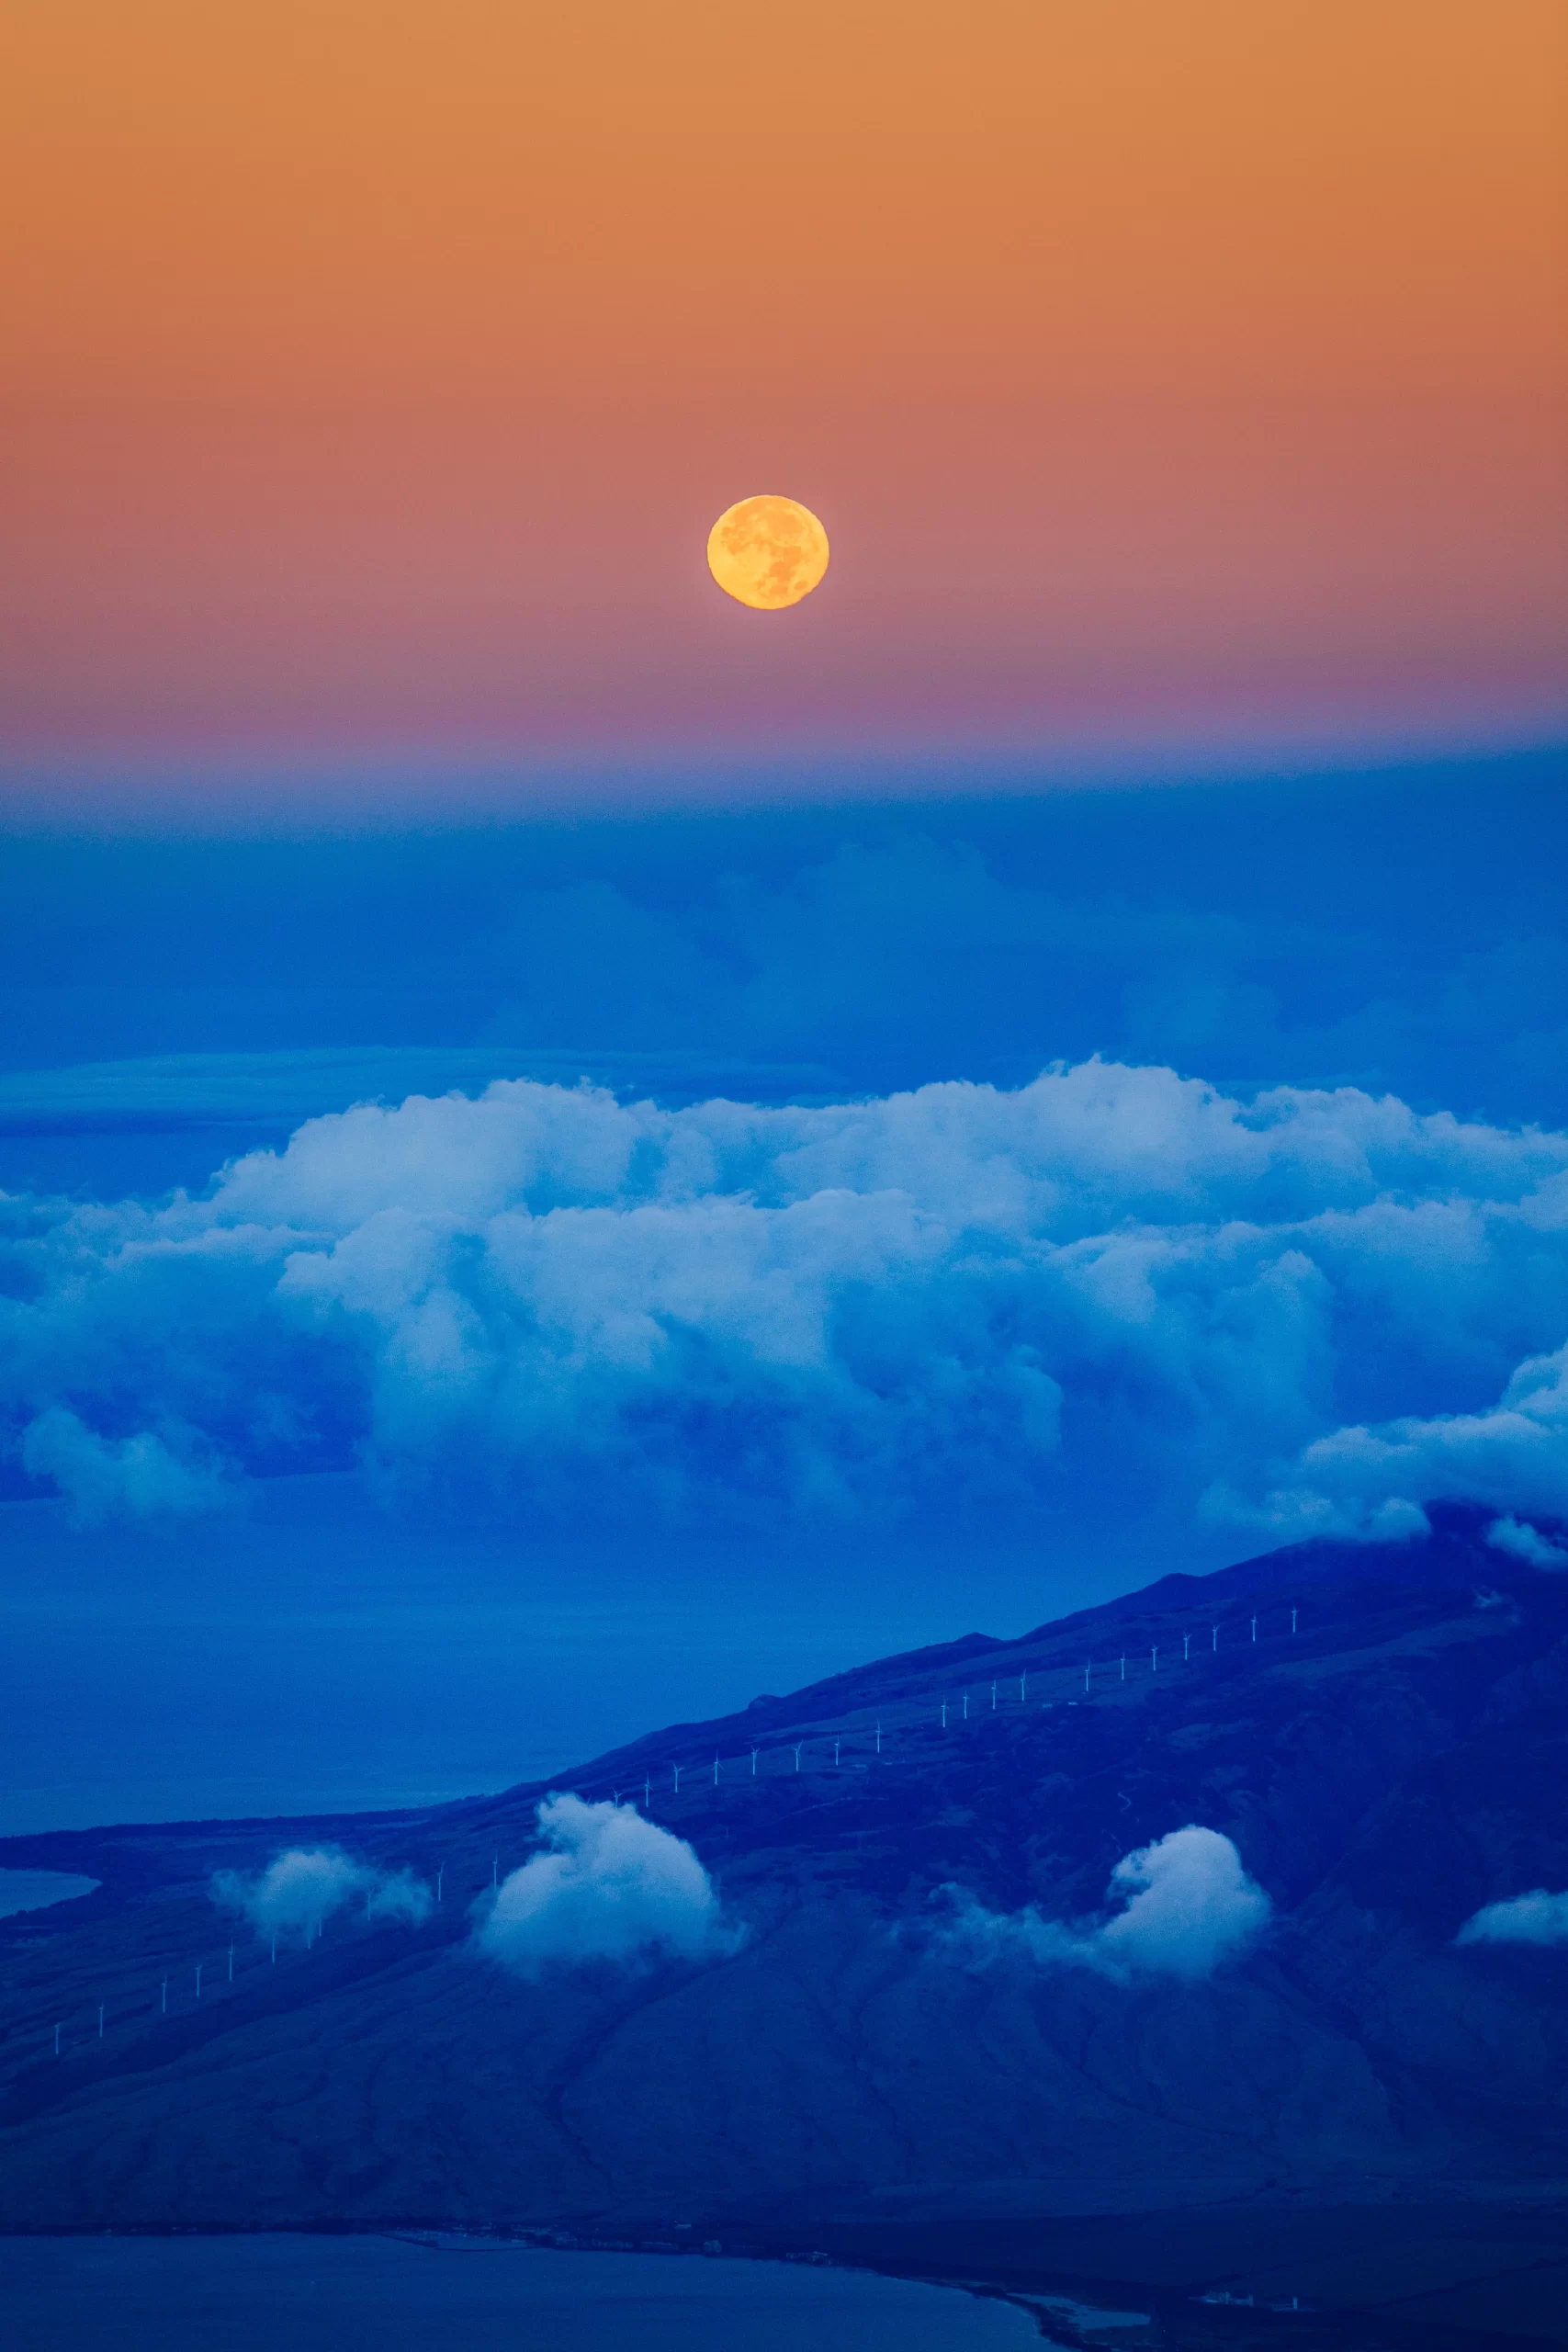 Haleakala Summit Parking, United States Published on June 5, 2016 Canon, EOS 5D Mark III Free to use under the Unsplash License Moon rise at Haleakala Summit